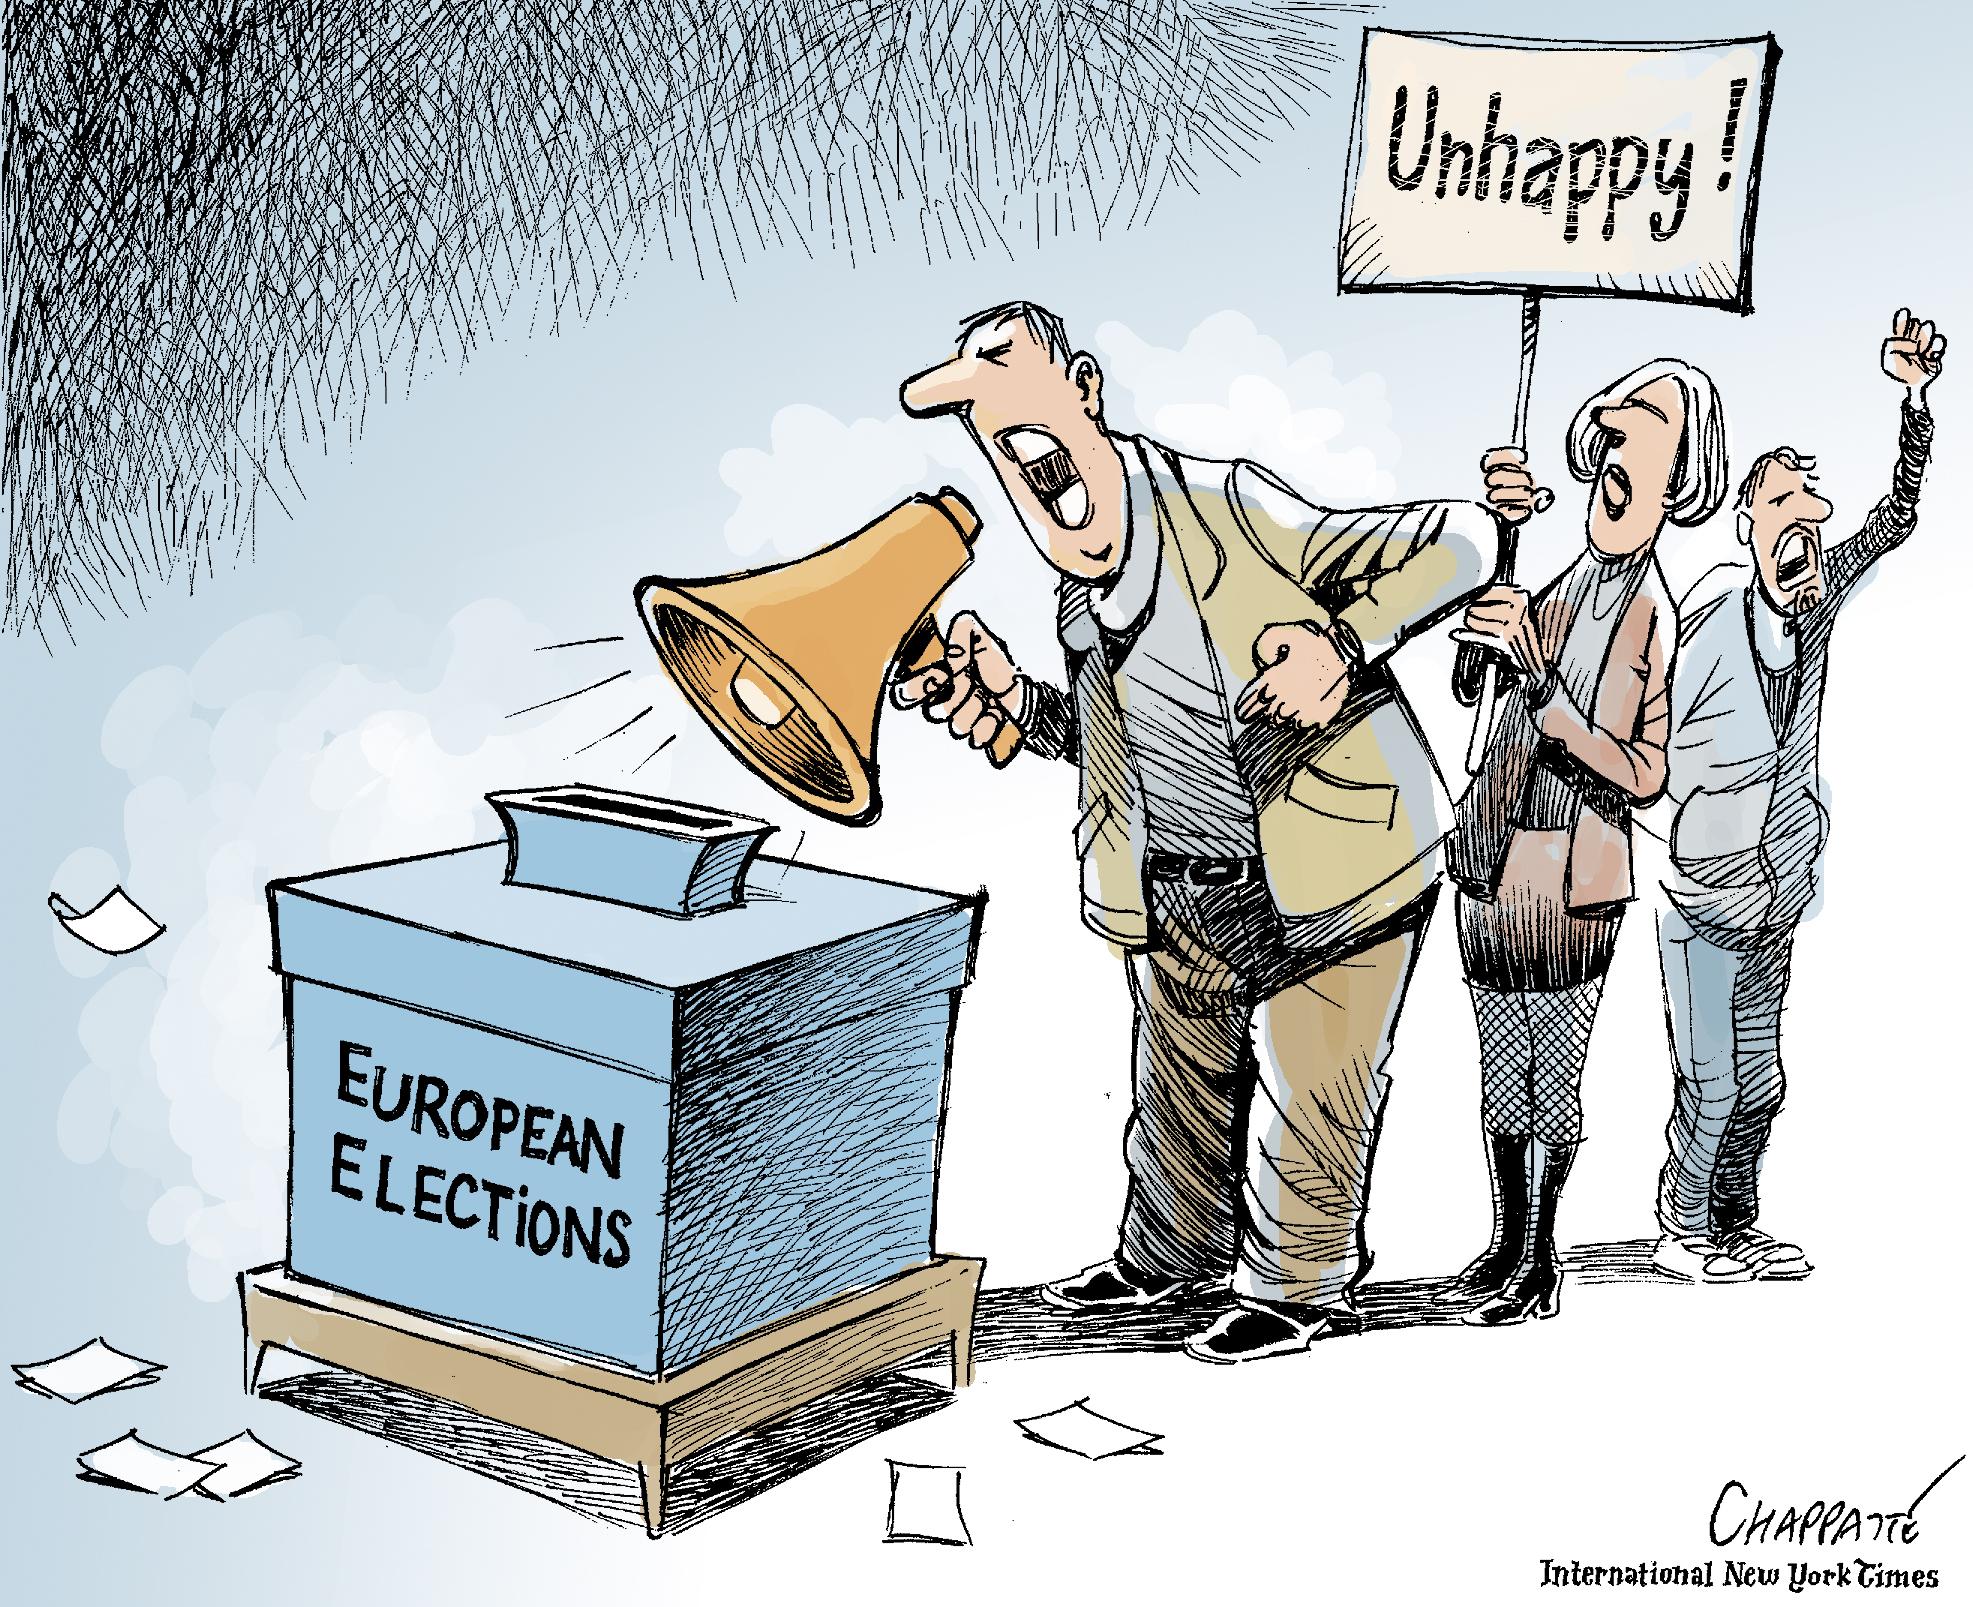 Protest vote in Europe